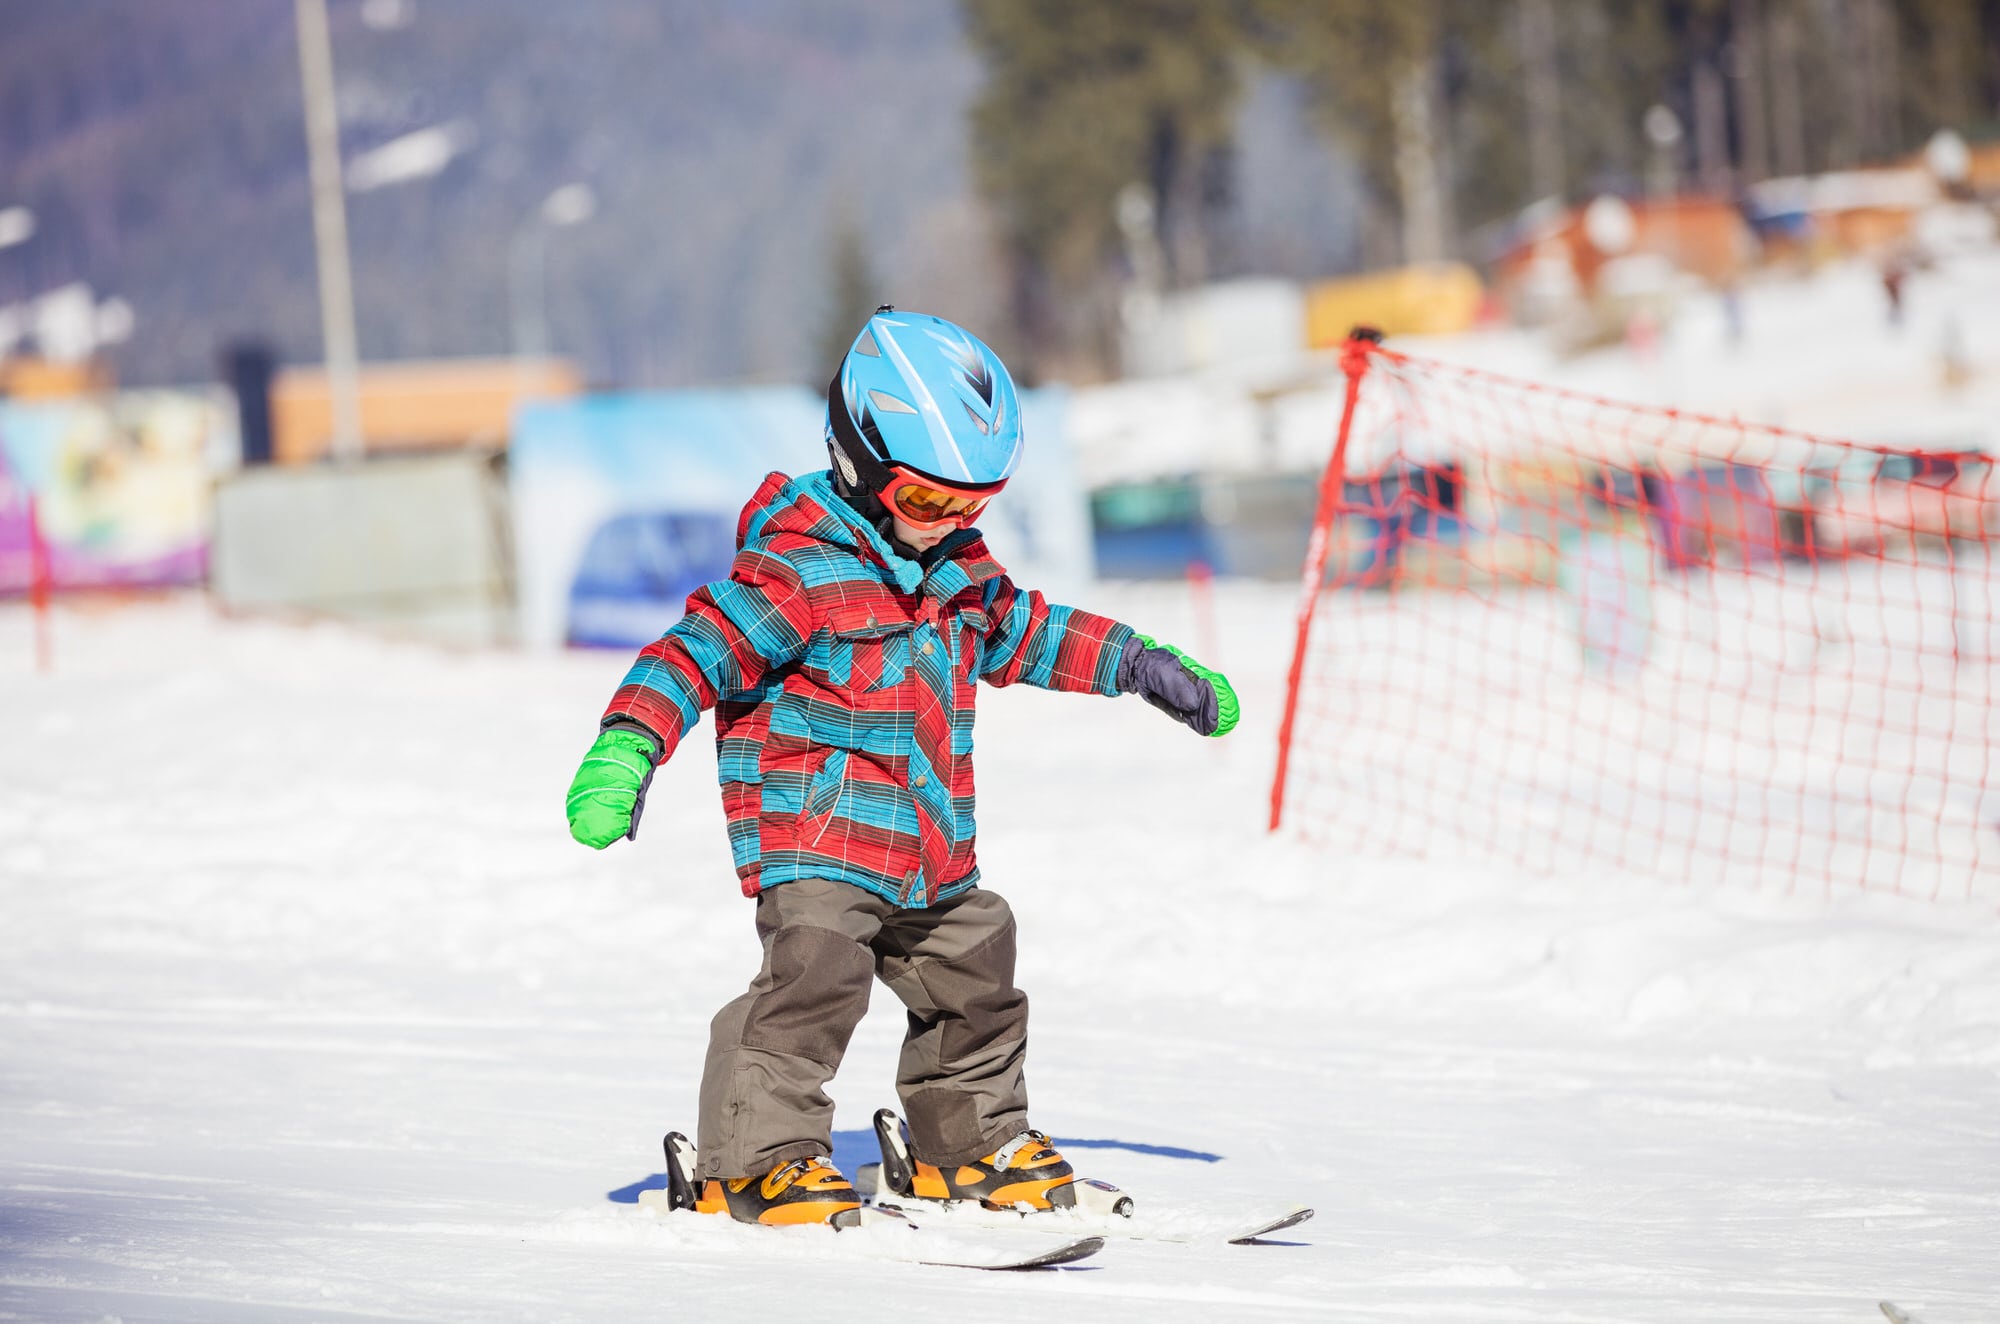 Ski Kinderski Babyski Lernski 70cm 7 Farben für Kinder Wintersport Skier 